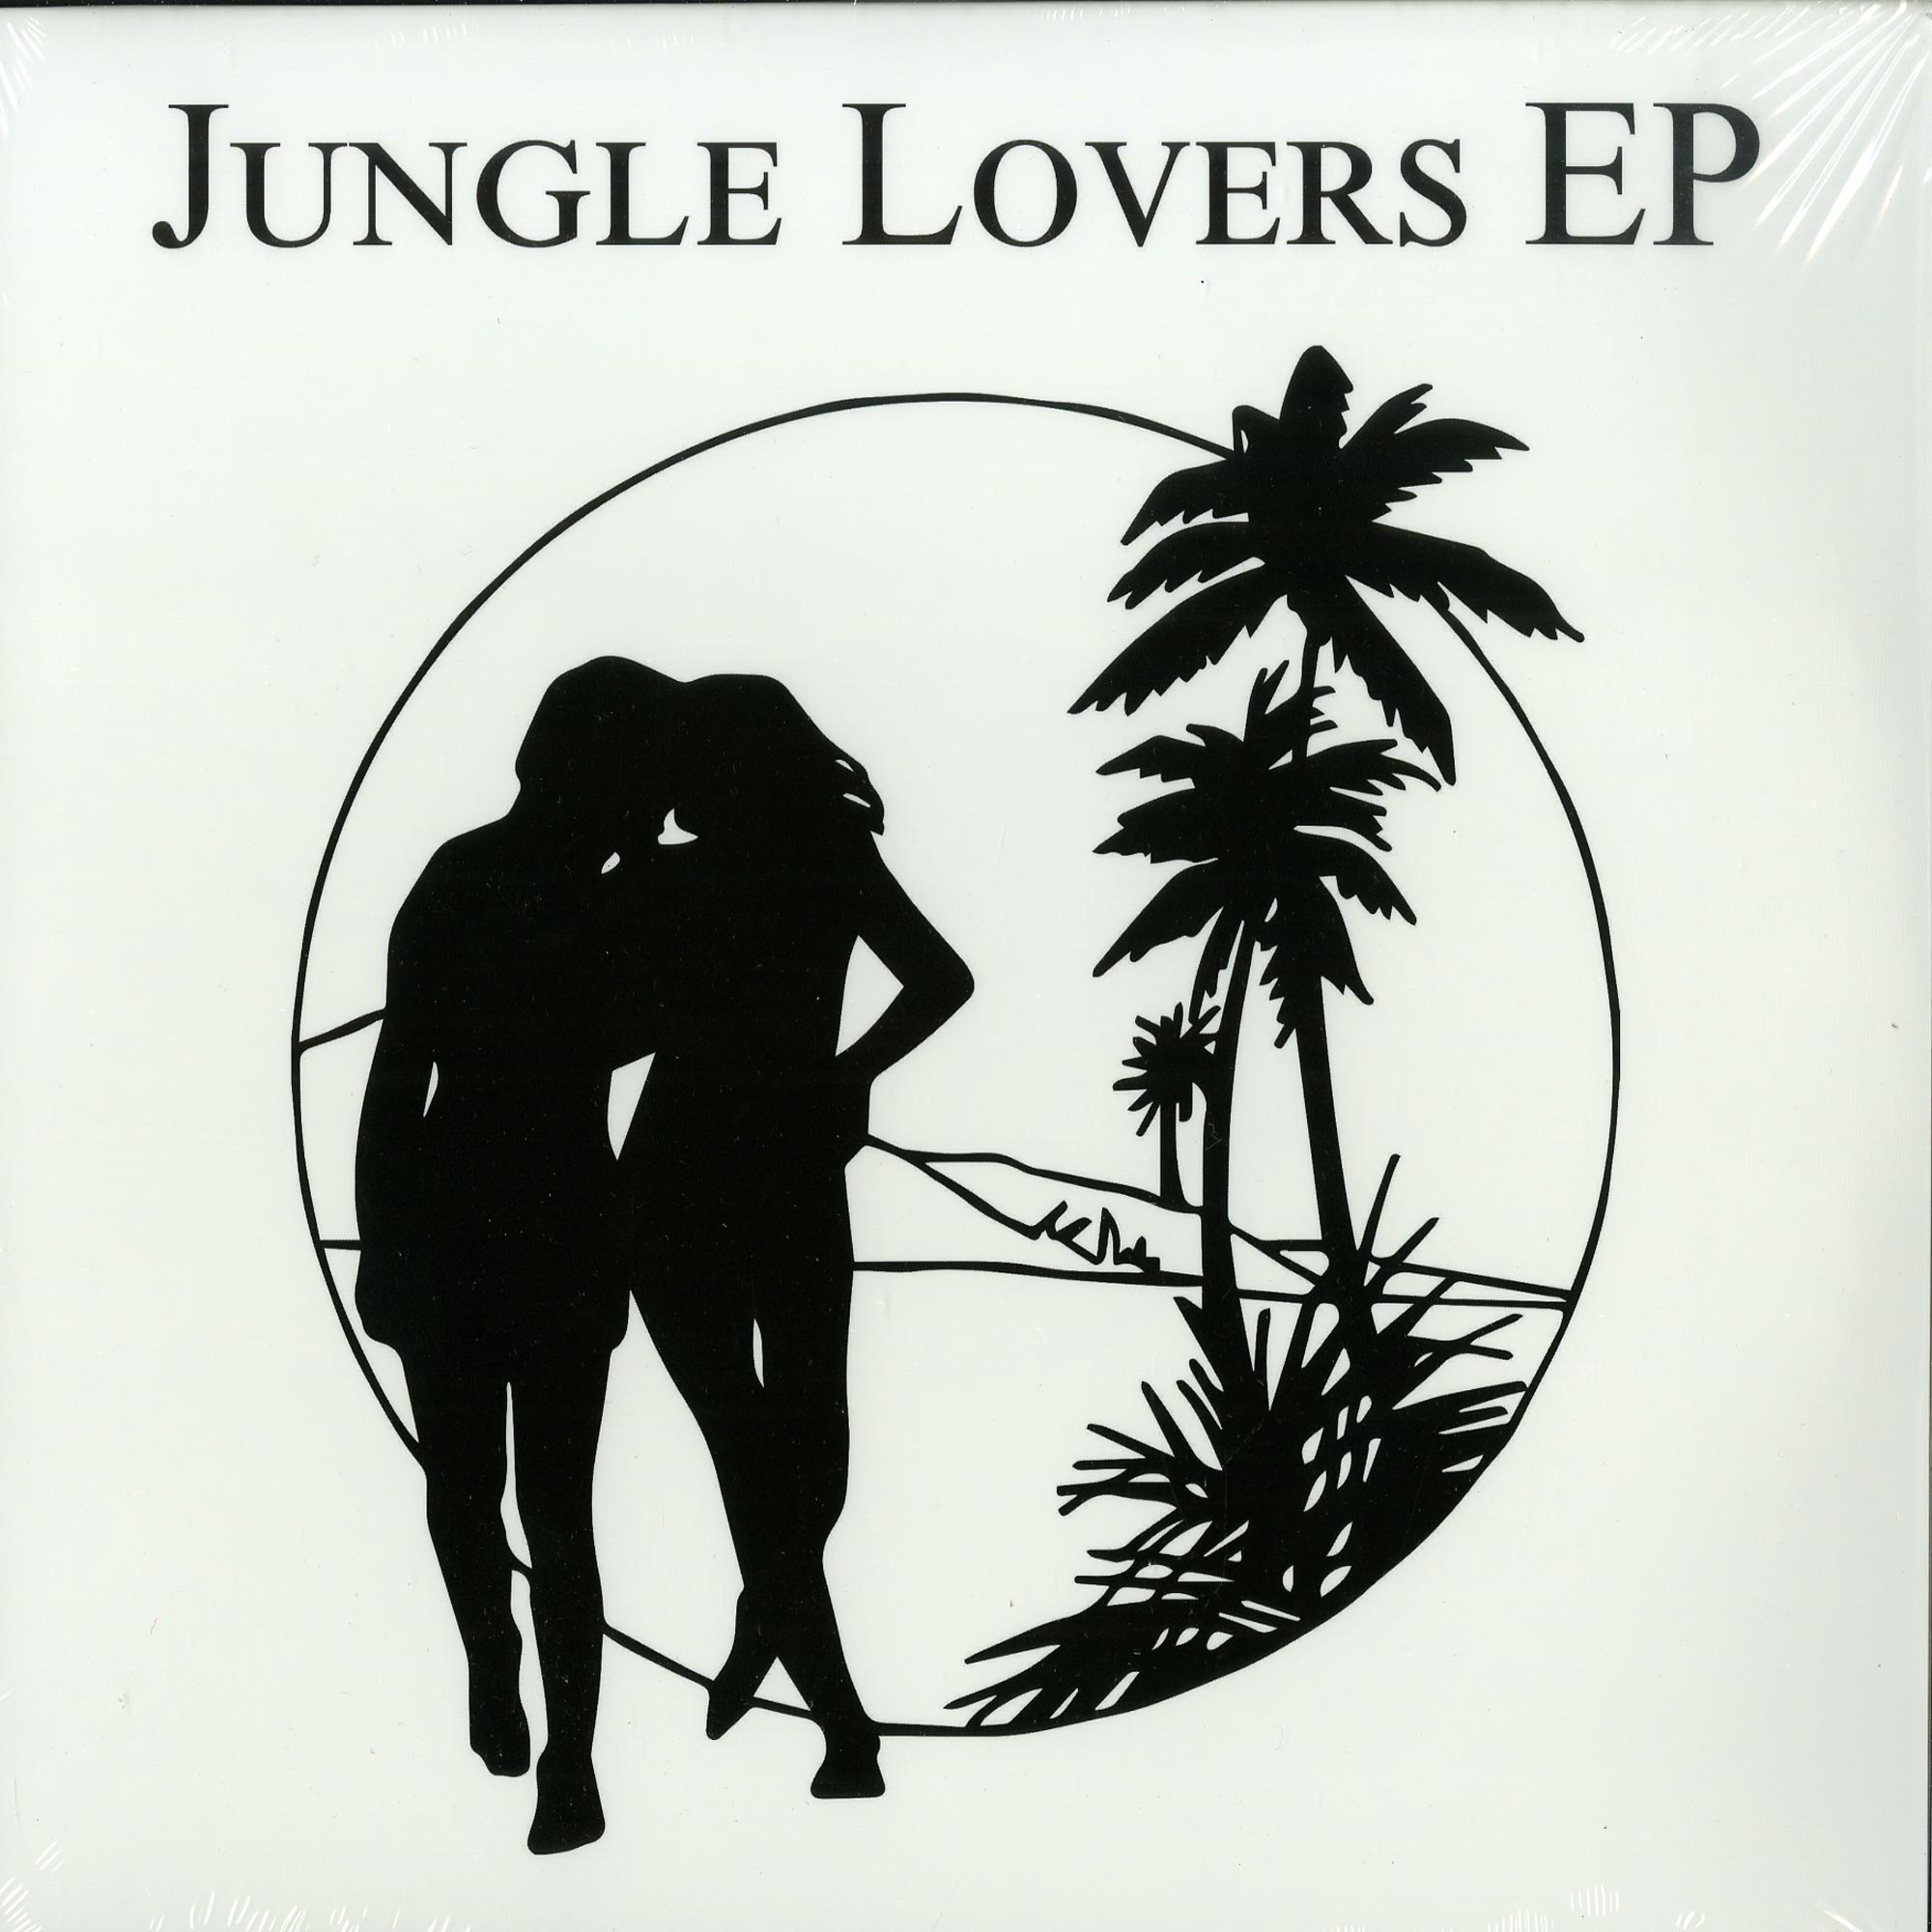 Jungle love. Lovers Ep 04. I Love Jungle. Making Love in the Jungle.